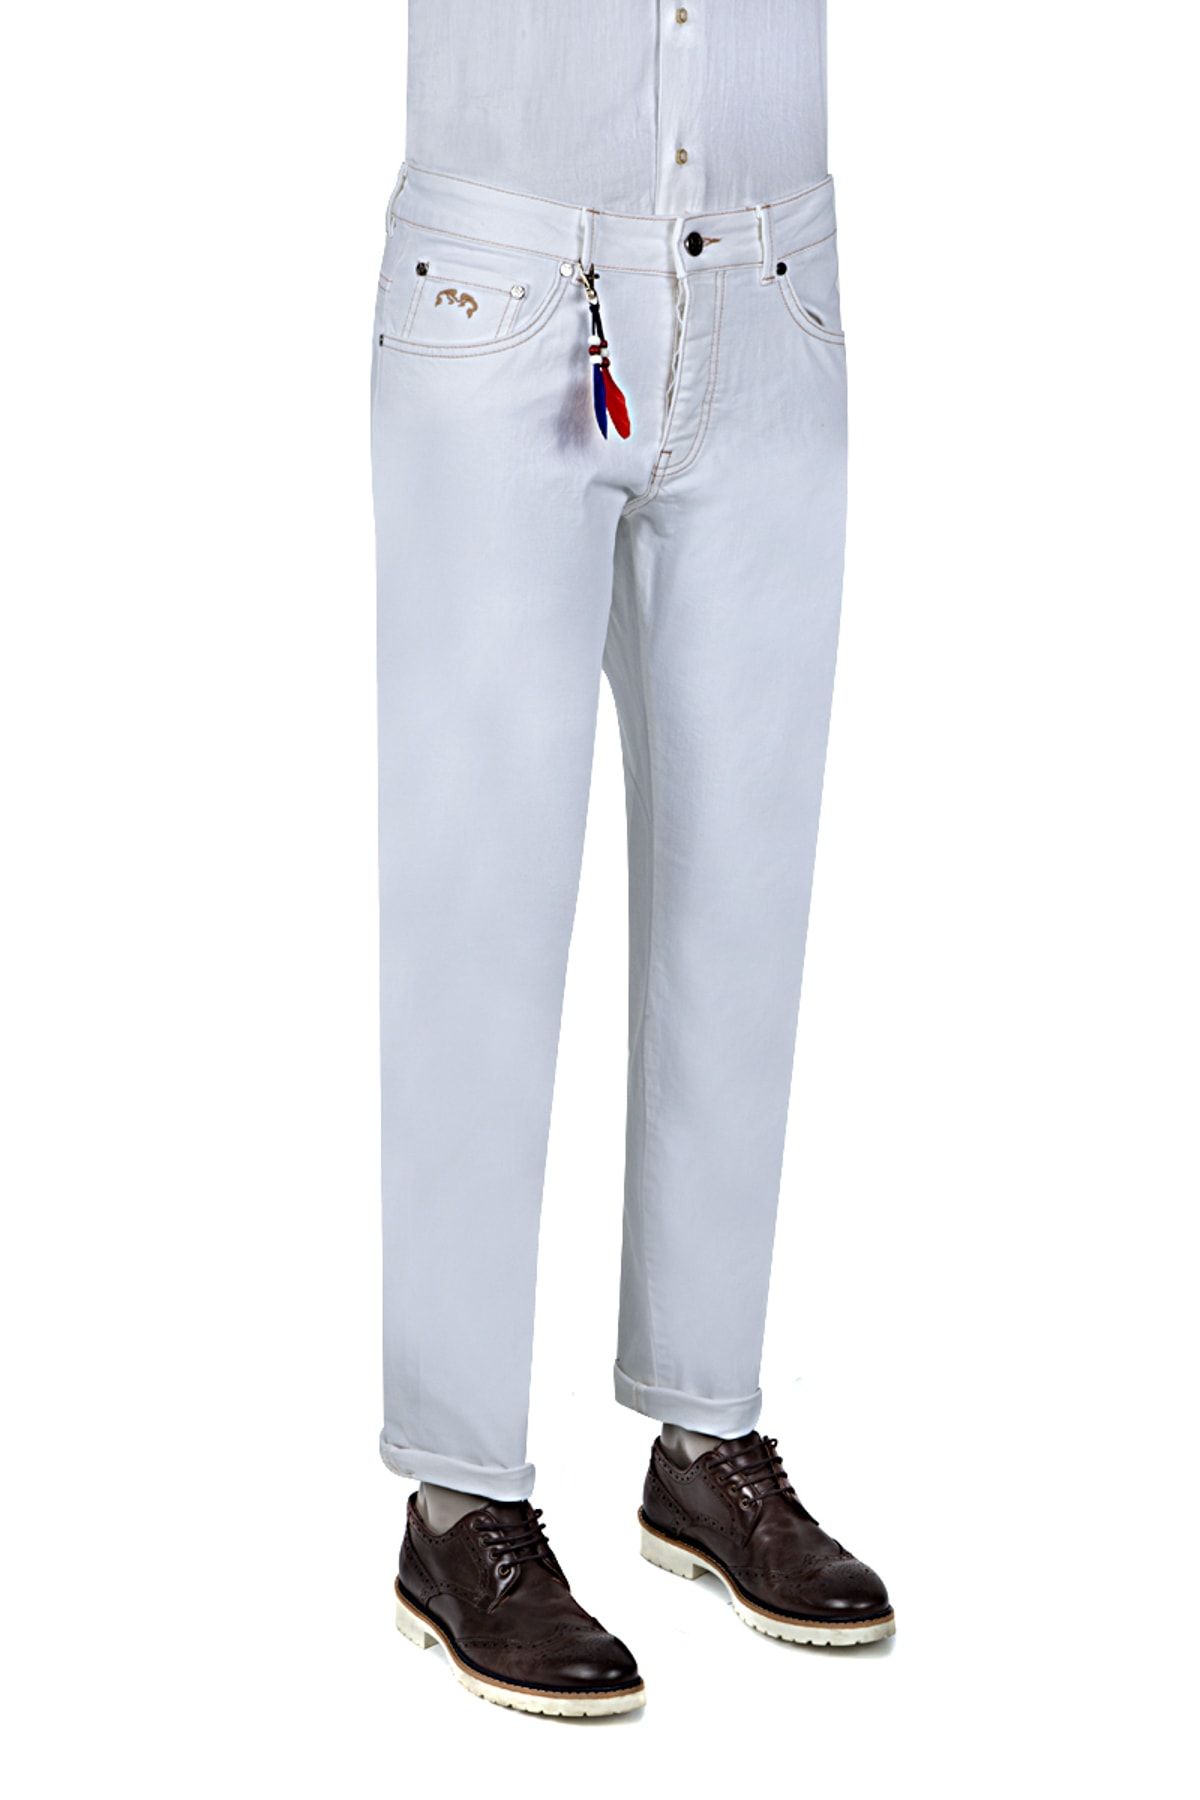 D'S Damat Beyaz Renk Erkek  Pantolon (Slim Fit)